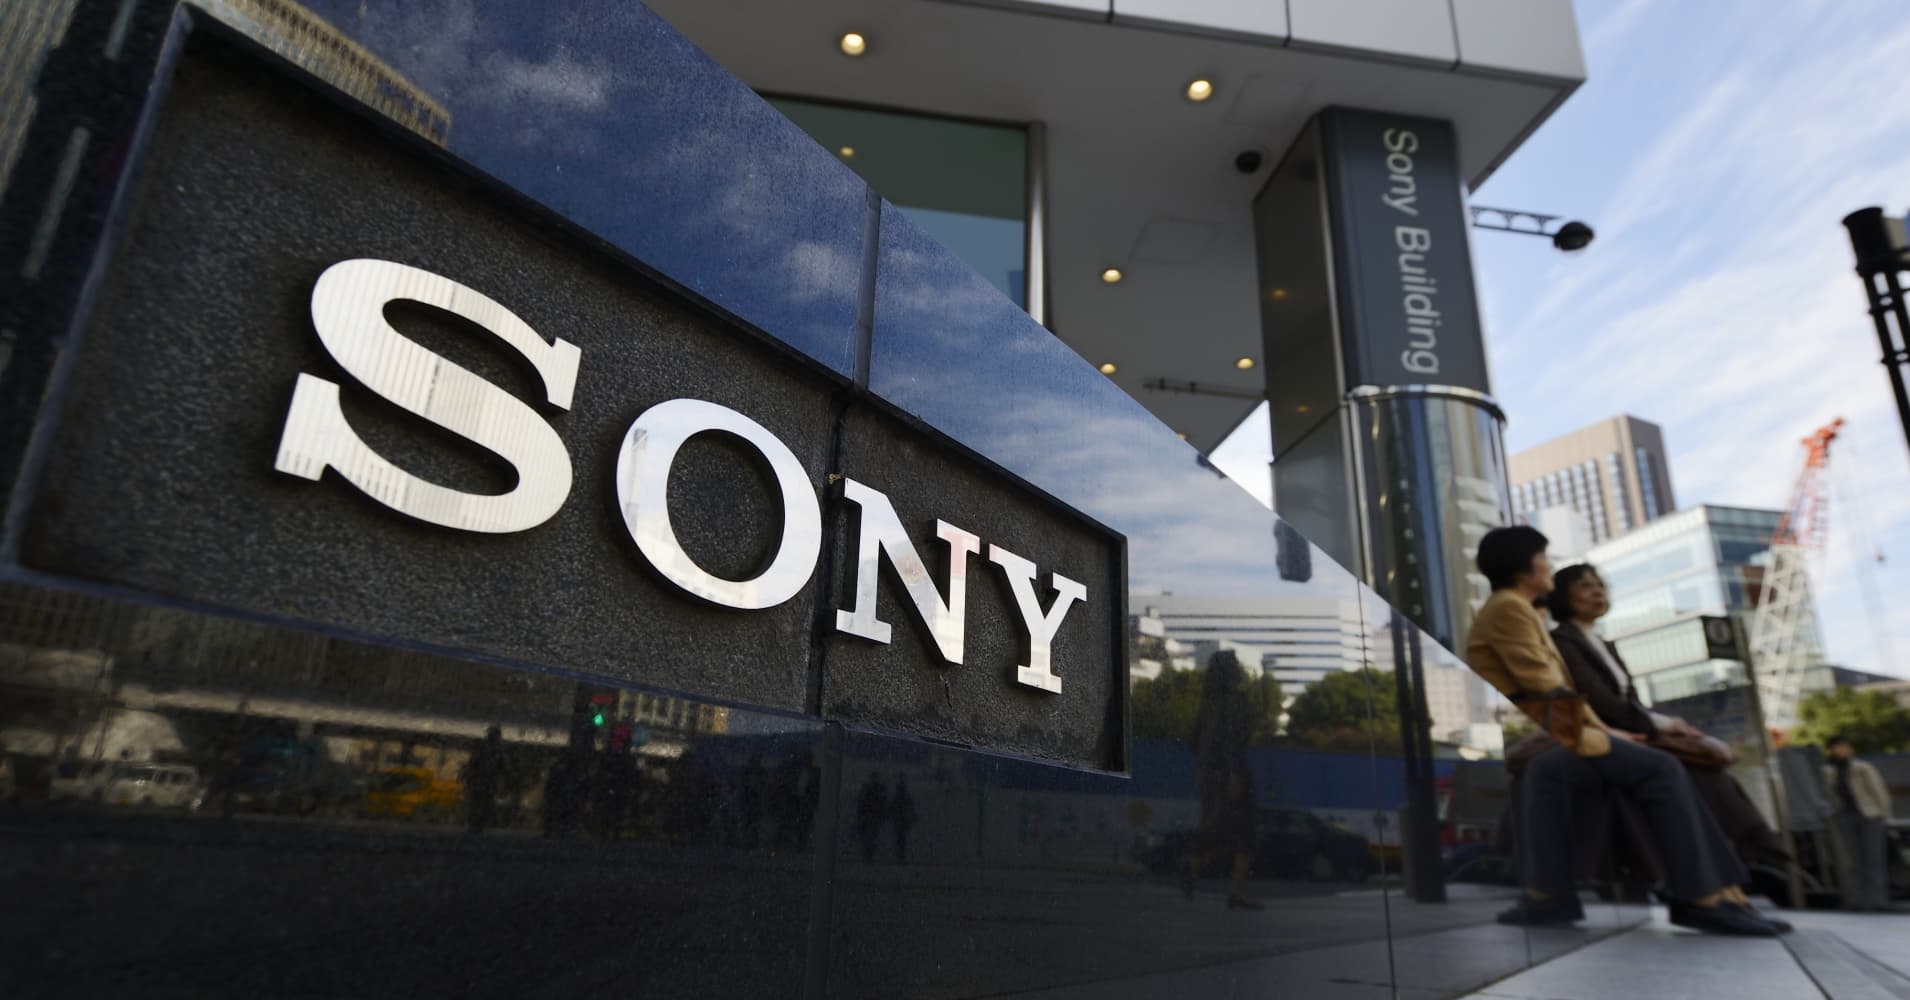 Sony - Company Review